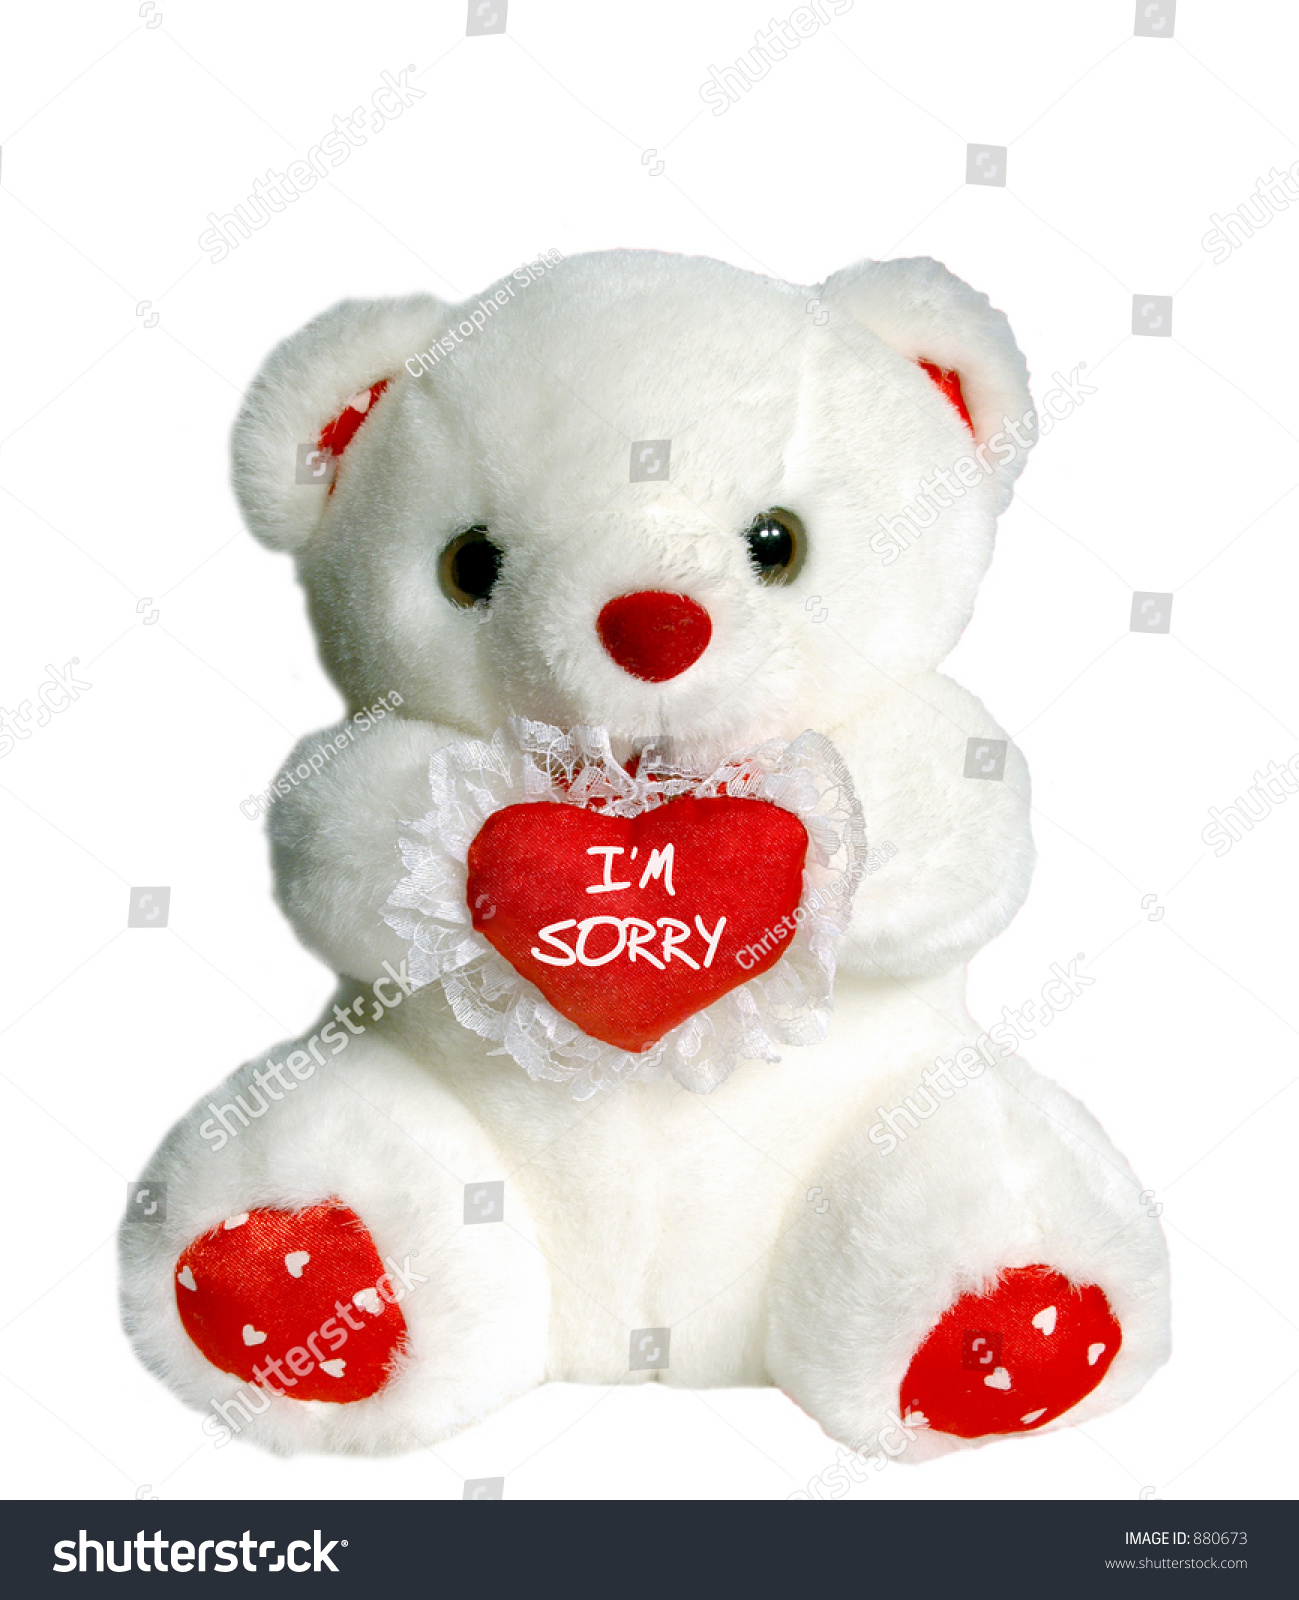 white teddy bear holding a heart